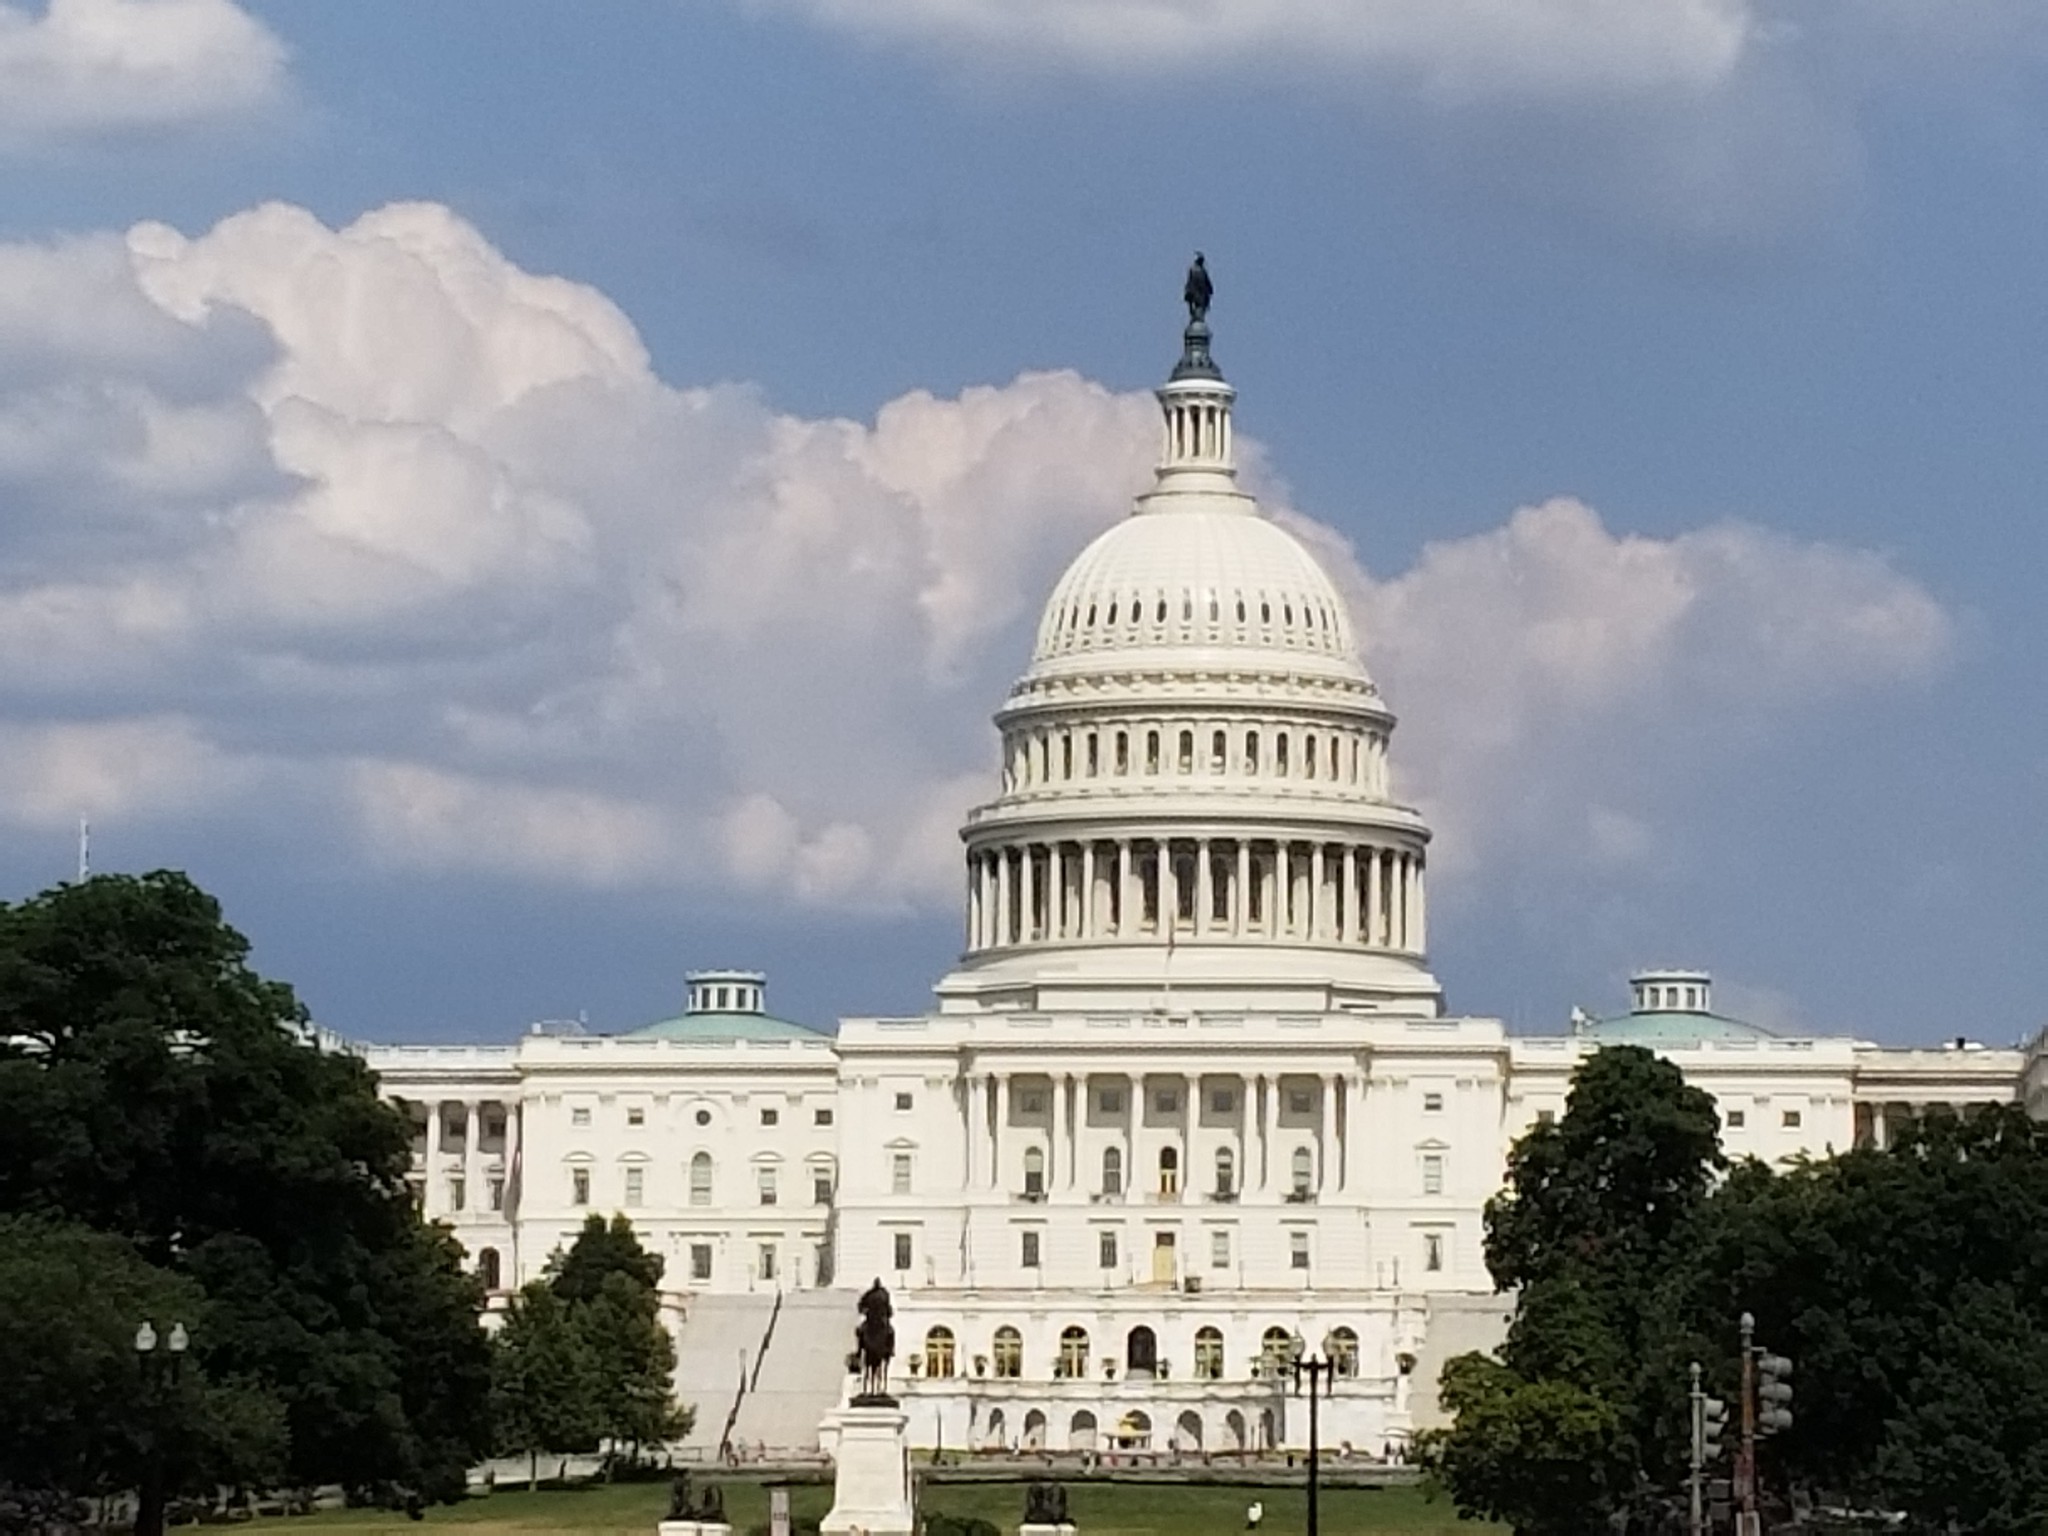 July 12, 2018 – Arriving in Washington DC